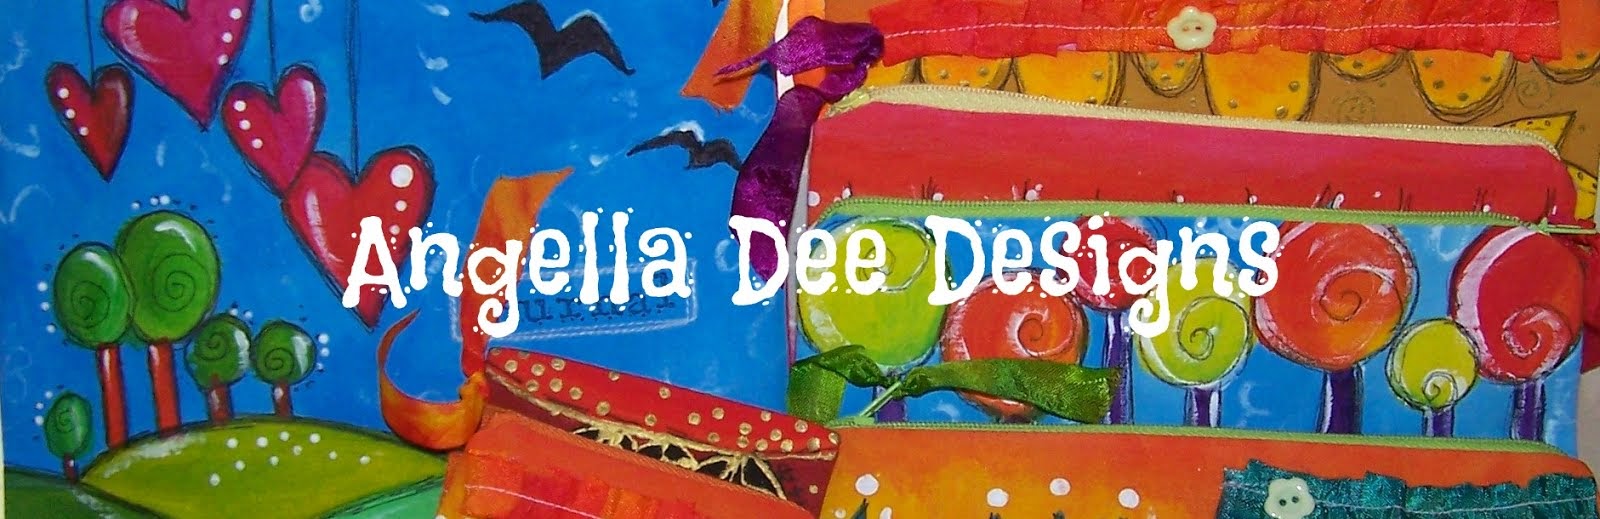 Angella Dee Designs